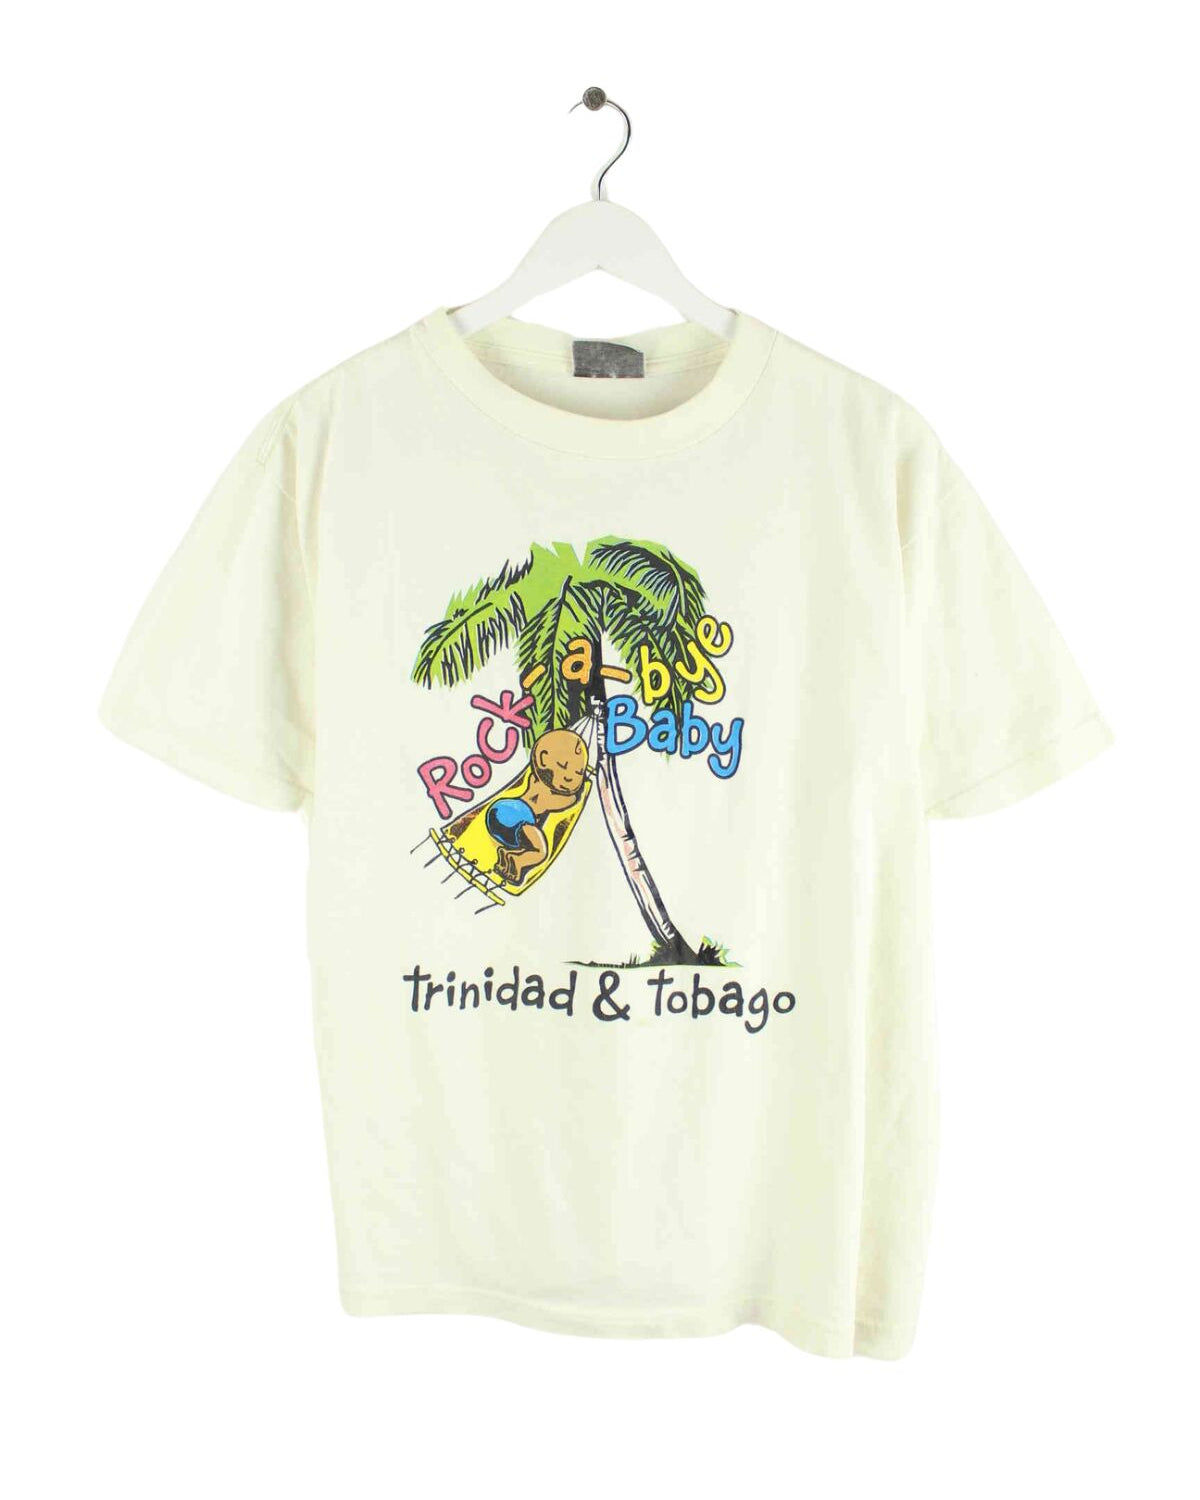 Vintage 90s Vintage Trinidad Baby Print T-Shirt Weiß S (front image)